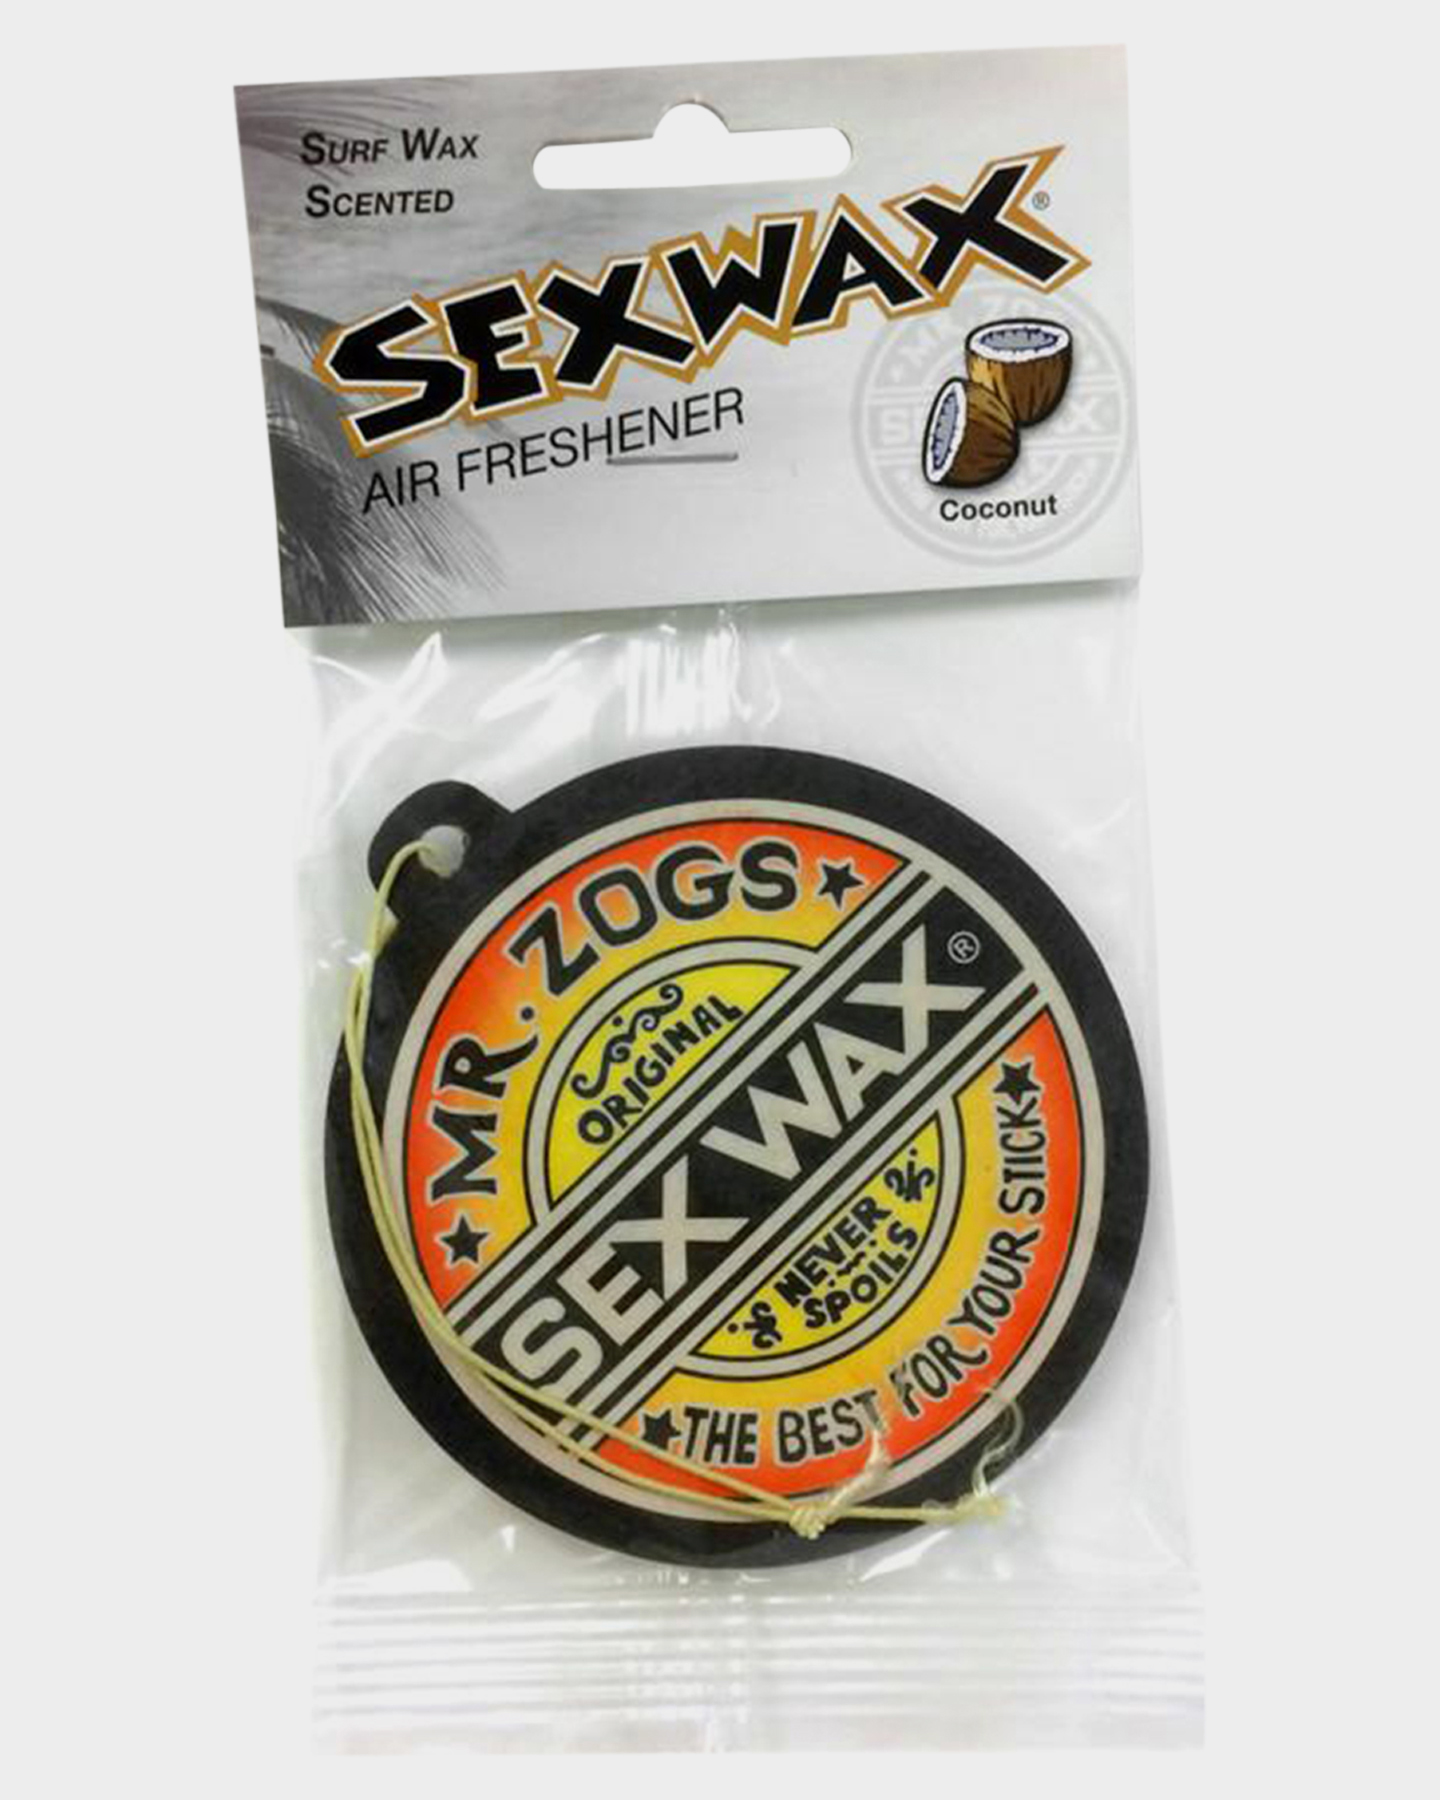 Sexwax Large 5.5 Air Freshener, Coconut